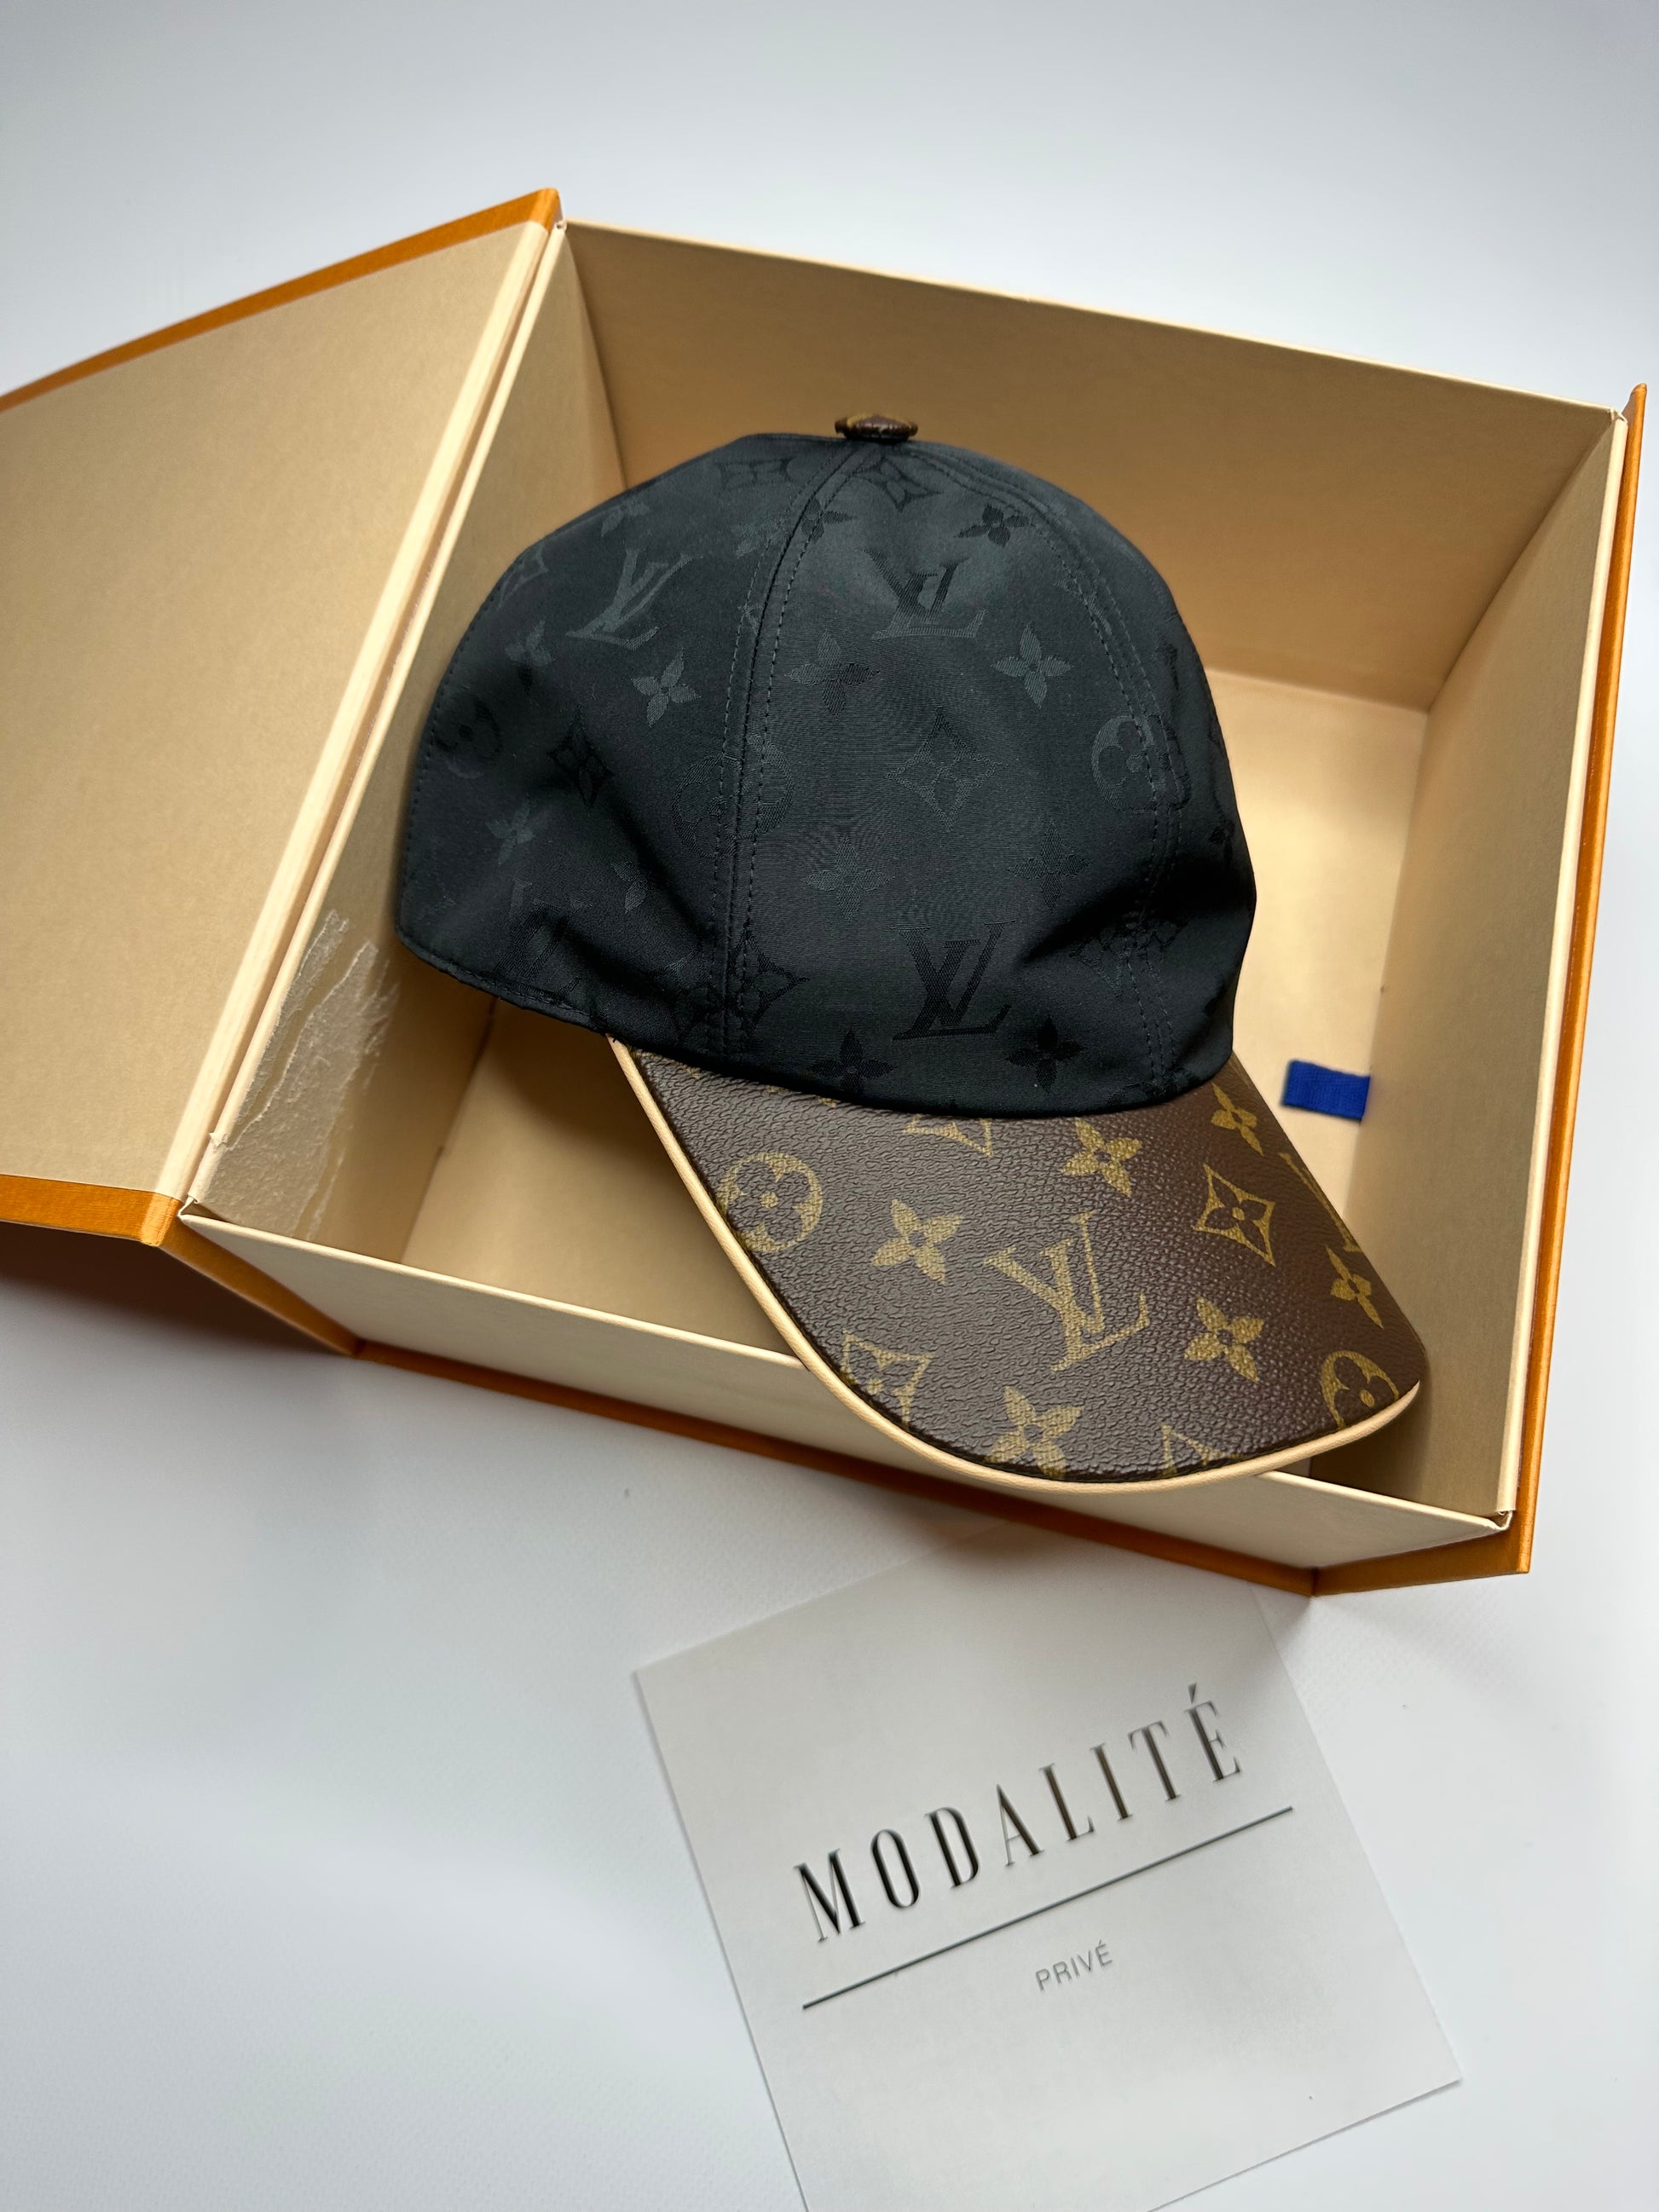 Louis Vuitton Monogram Cap – Modalite Prive